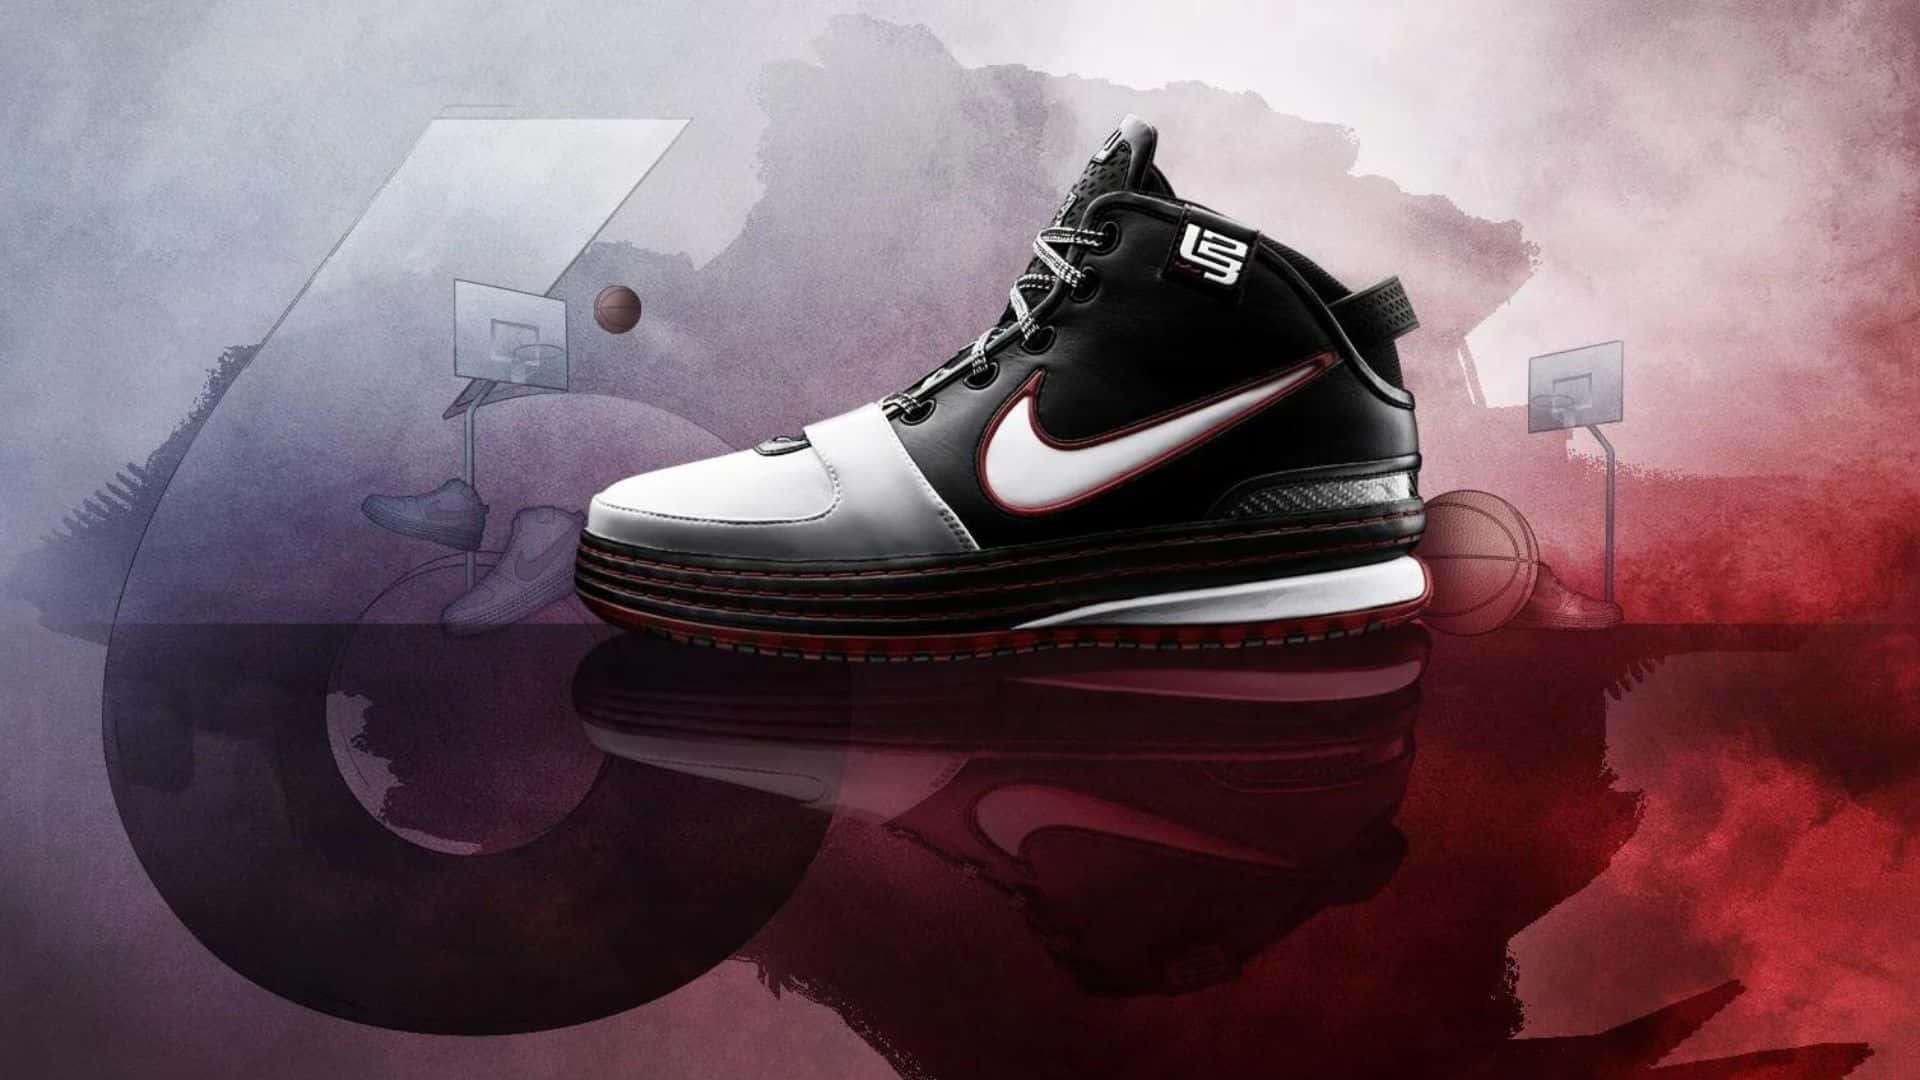 Nike Basketball Shoe Promotional Artwork Wallpaper